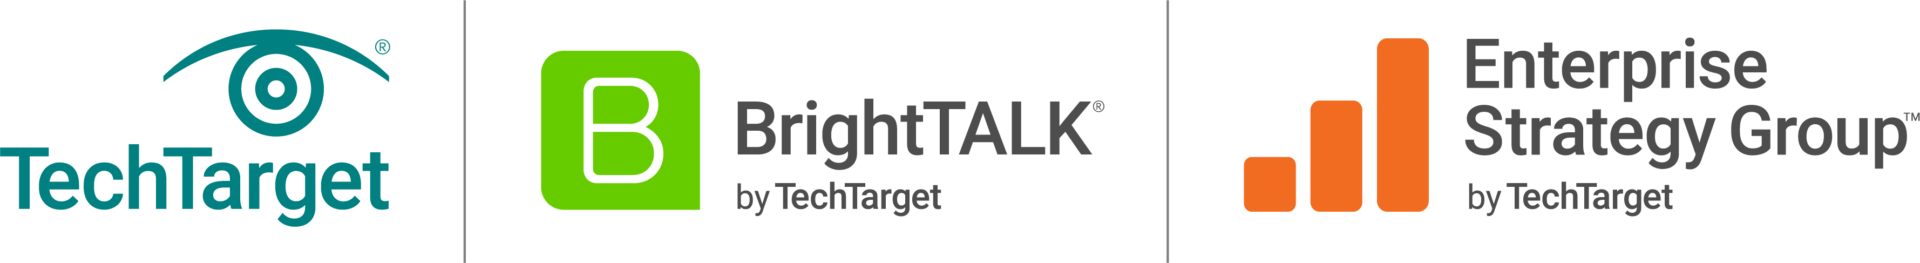 TechTarget_ESG_BrightTALK_RGB_Lockup